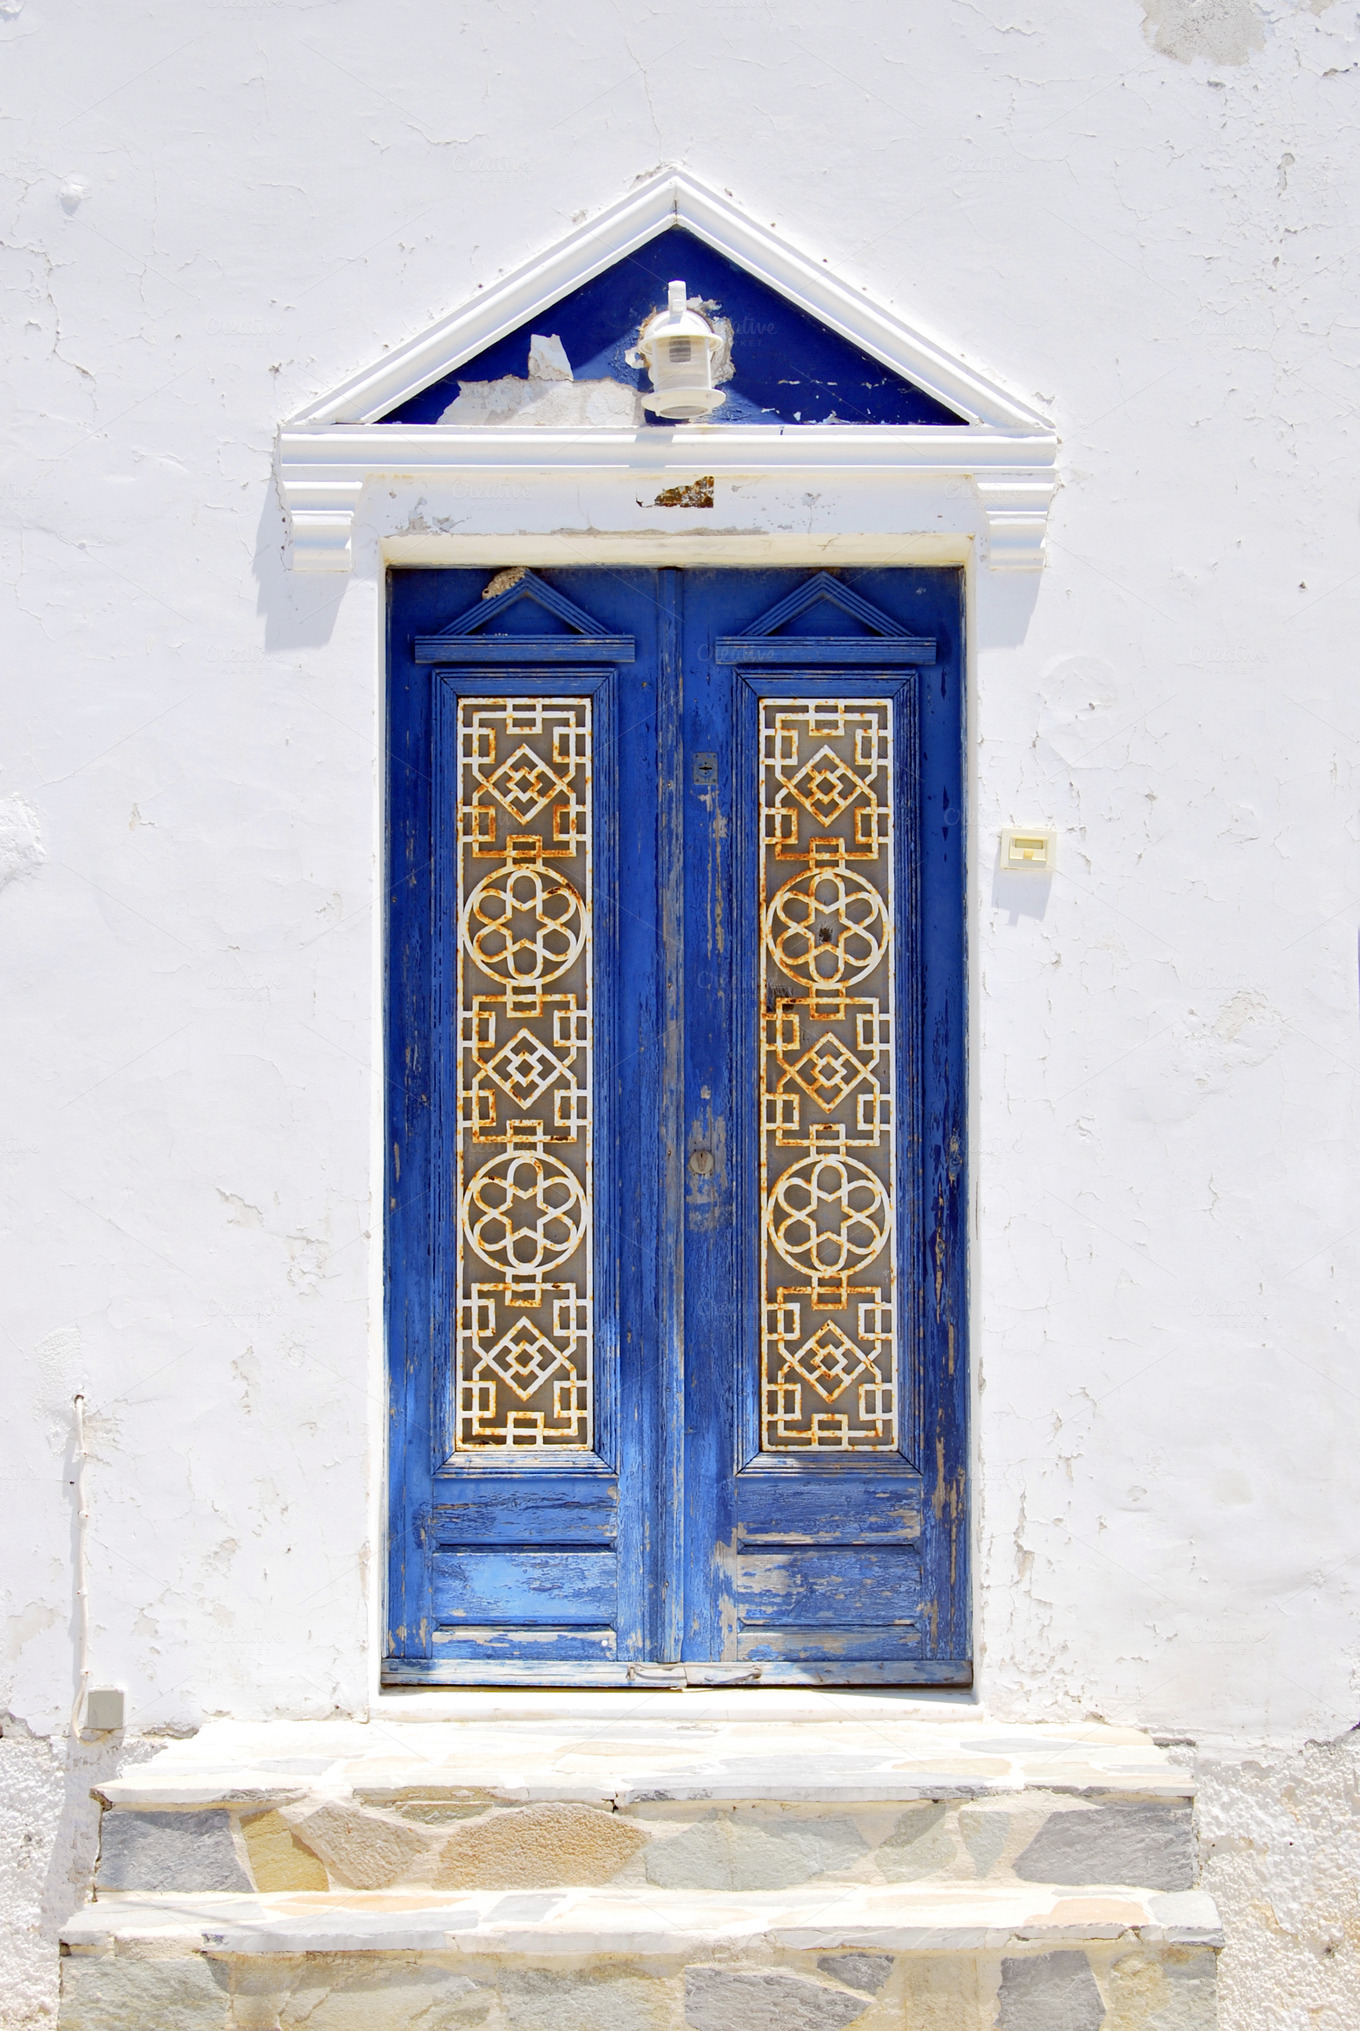 Blue door in Santorini, Greece ~ Architecture Photos on Creative Market